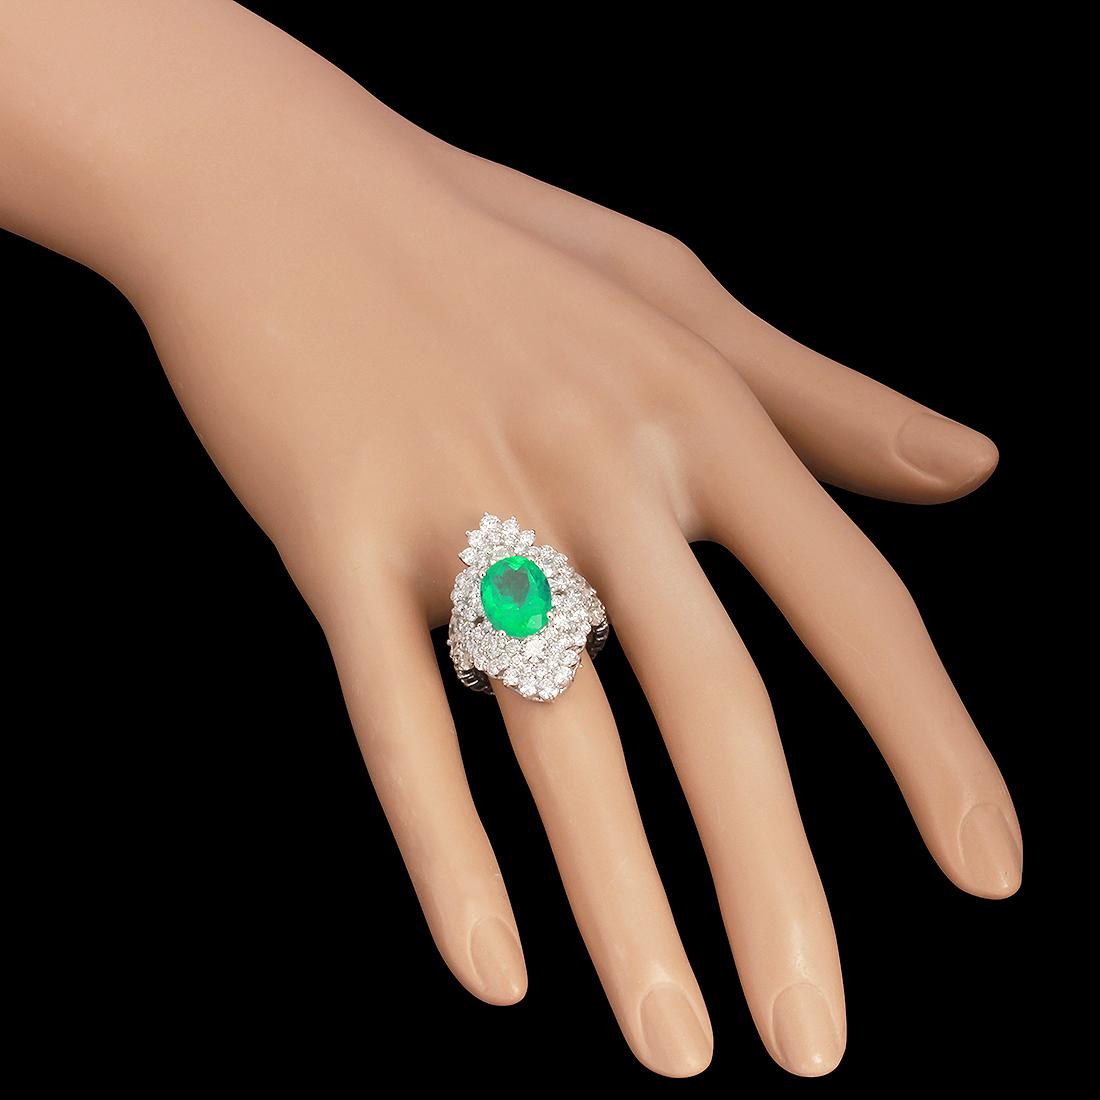 14k White Gold 4.23ct Emerald 4.60ct Diamond Ring